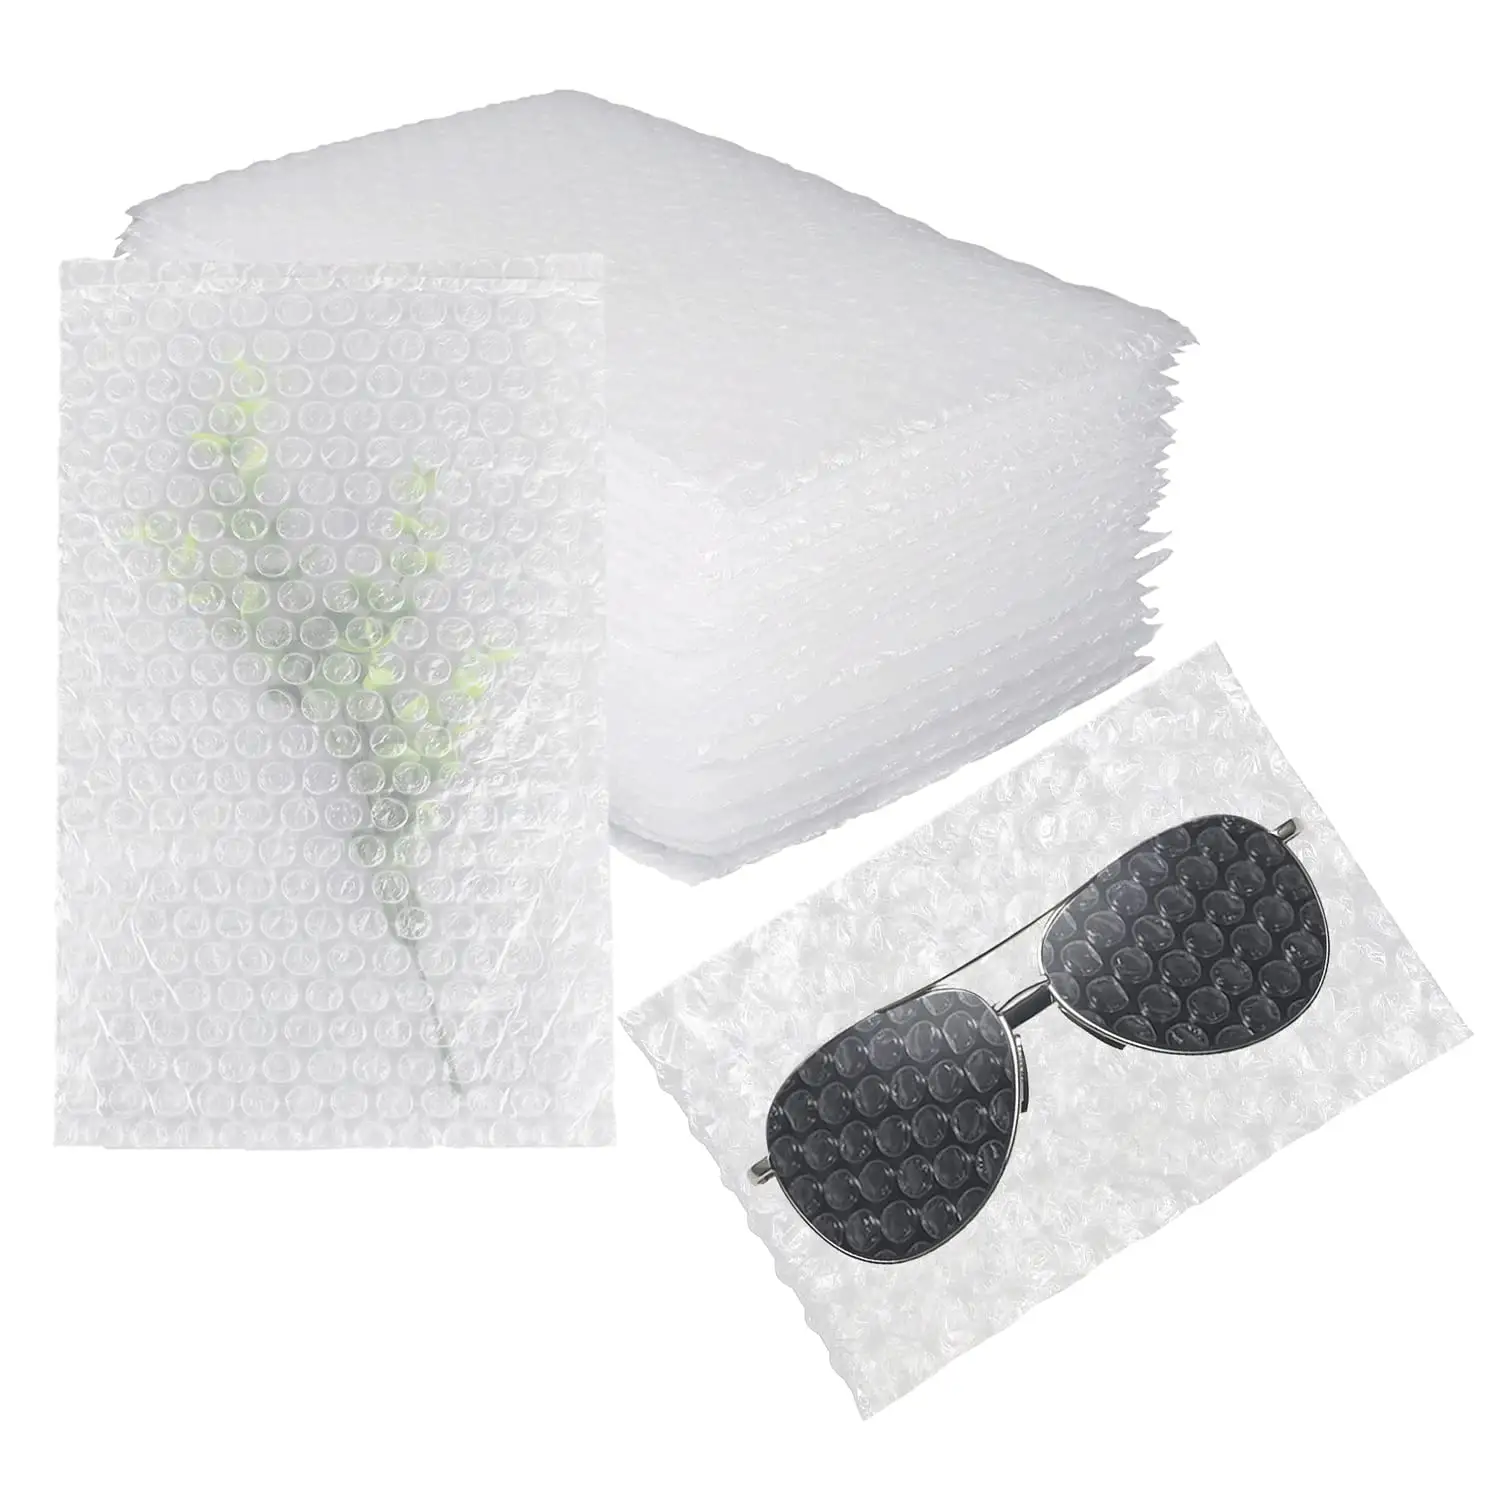 100pcs 보호 거품 파우치 Pe 거품 포장 가방 충격 방지 봉투 선물 포장 패키지 쿠션 커버 도매